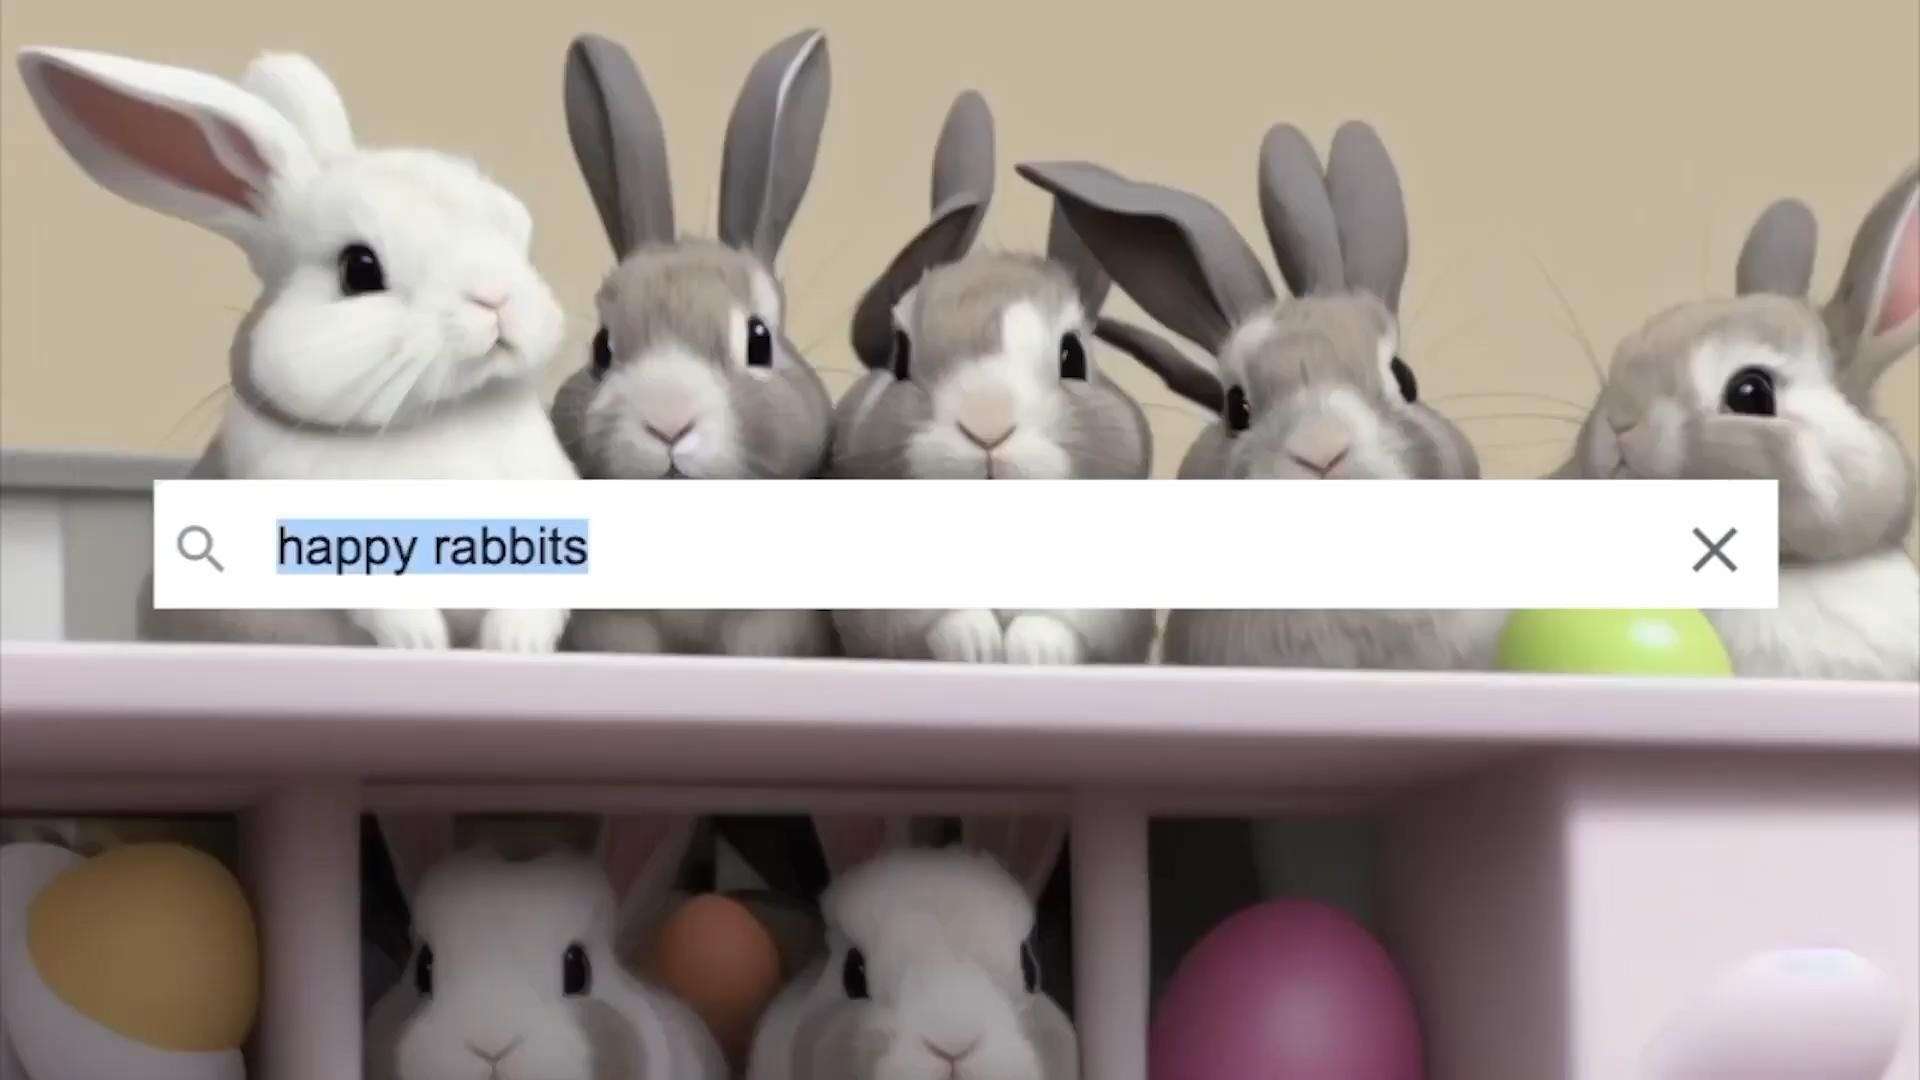 嗷嗷分享 | 07-《I want 1000 rabbits》第一届年度人工智能